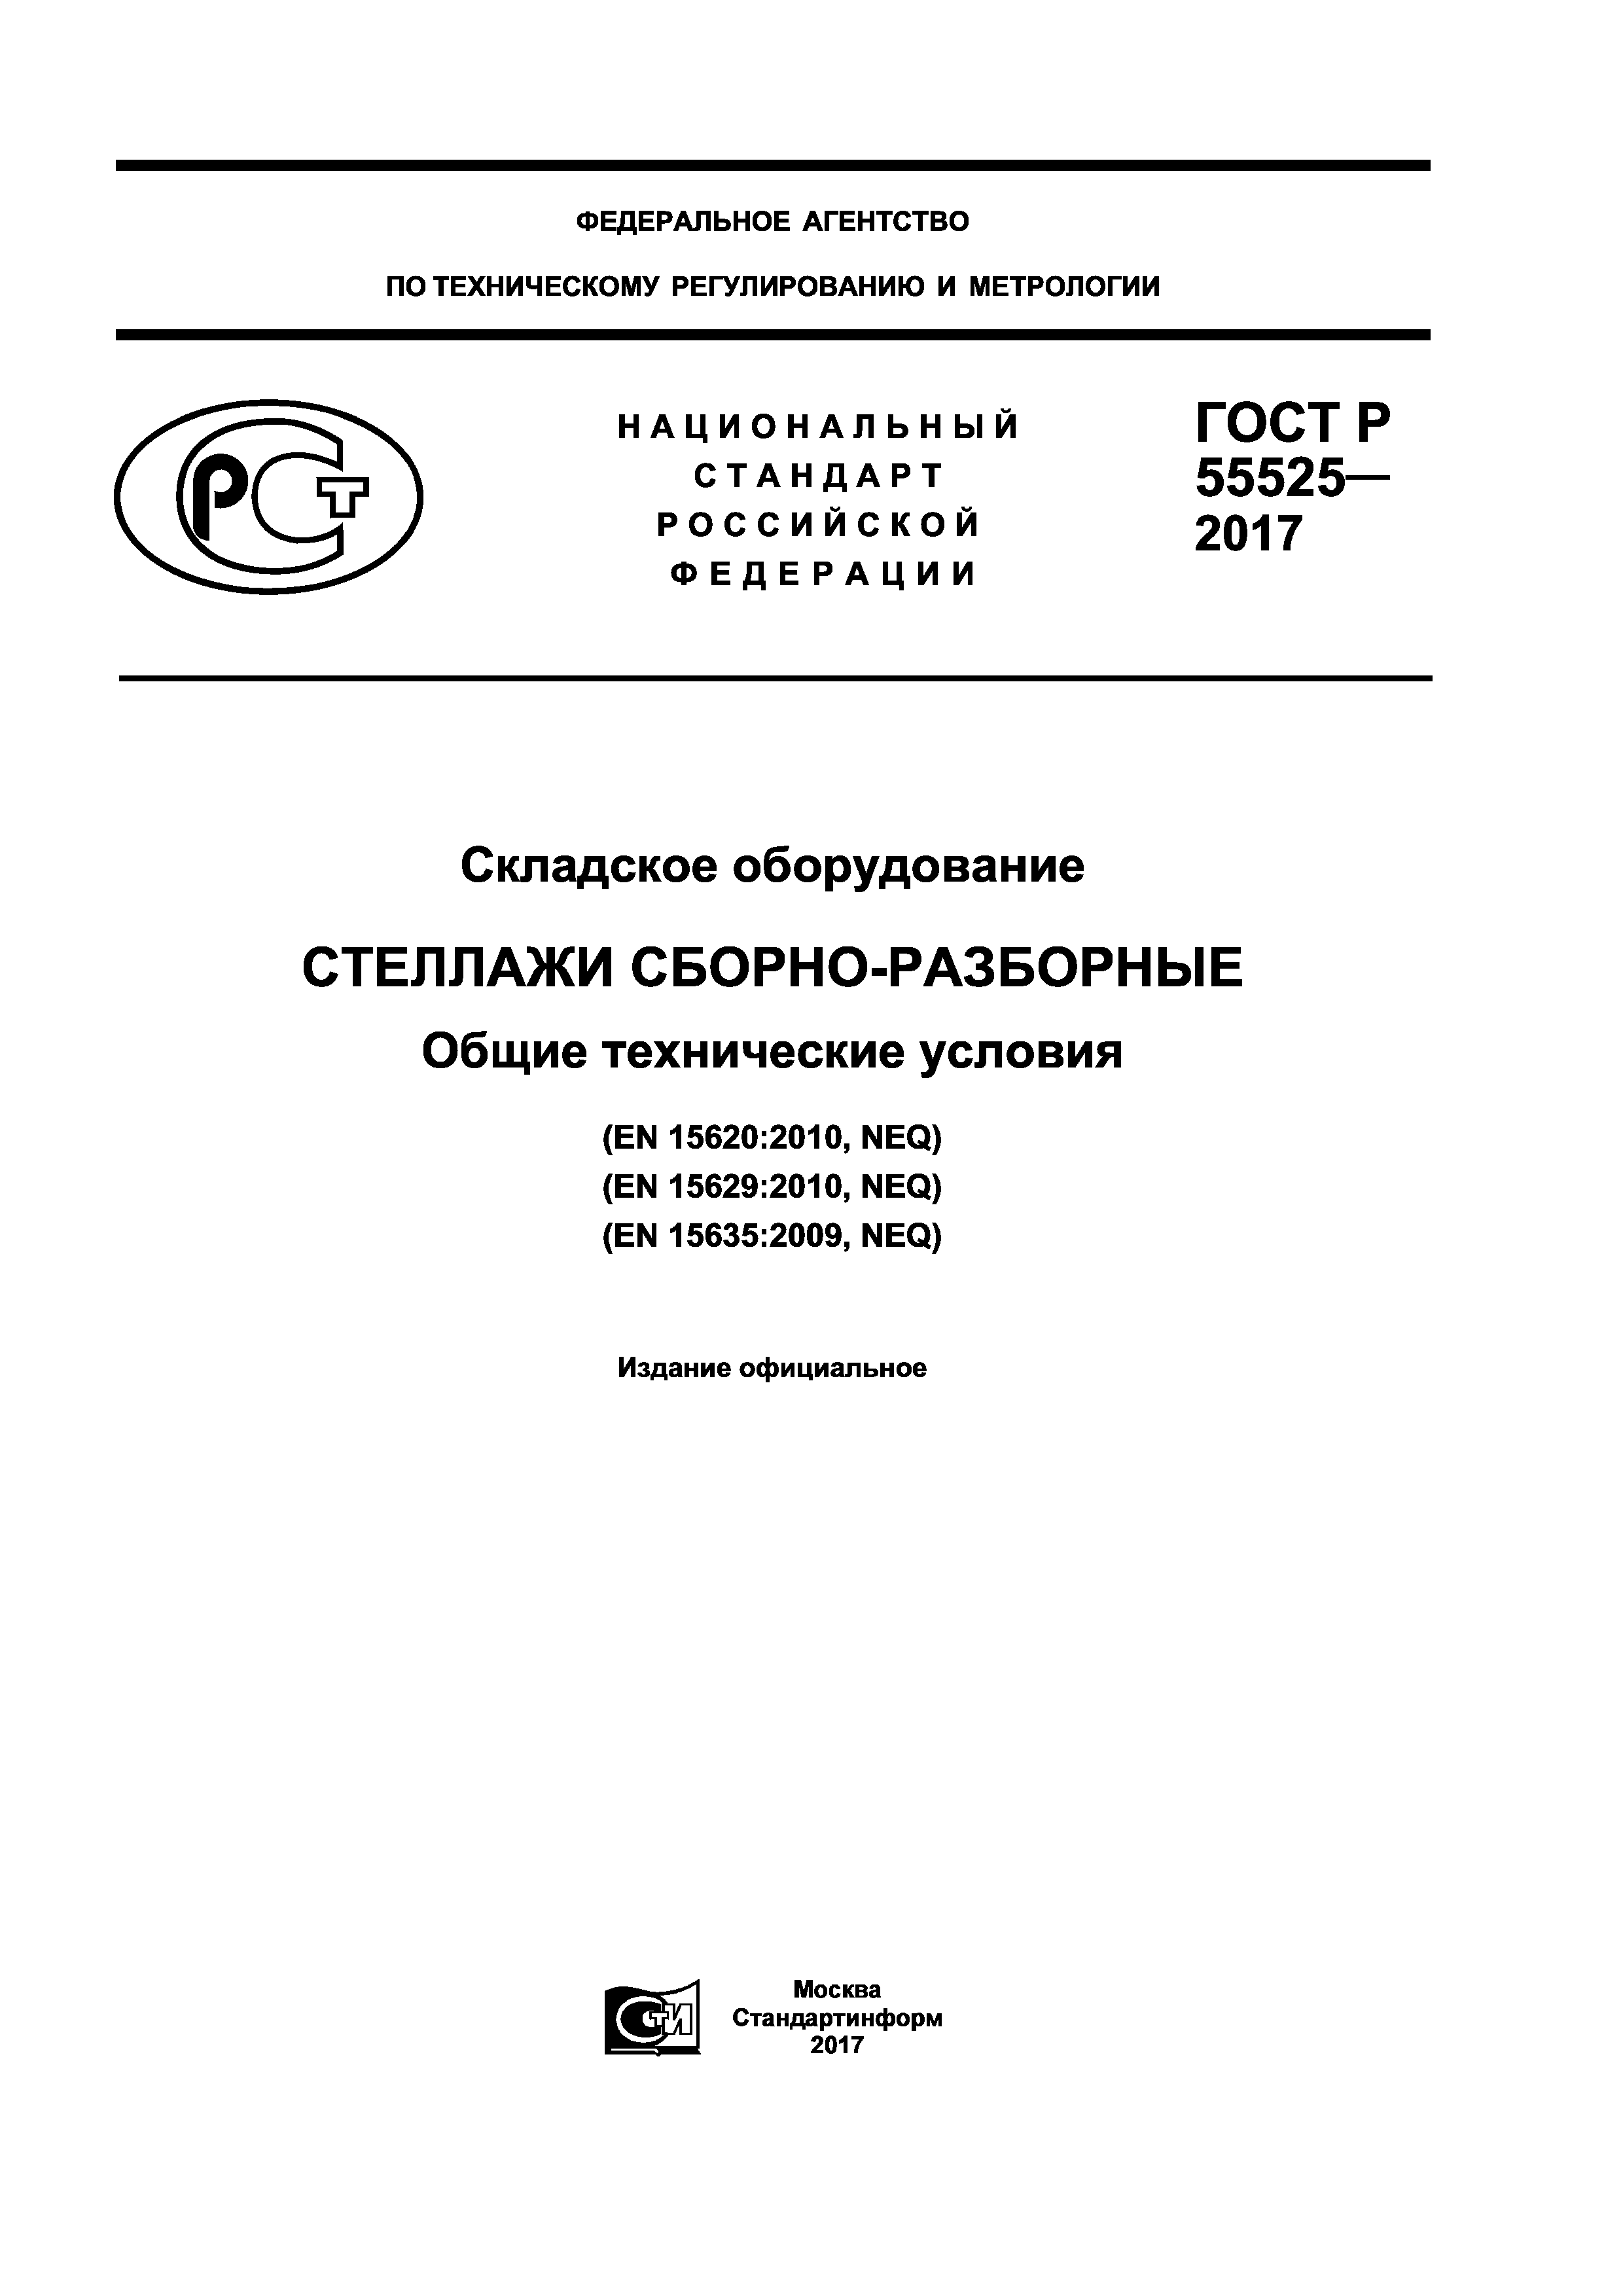 ГОСТ Р 55525-2017